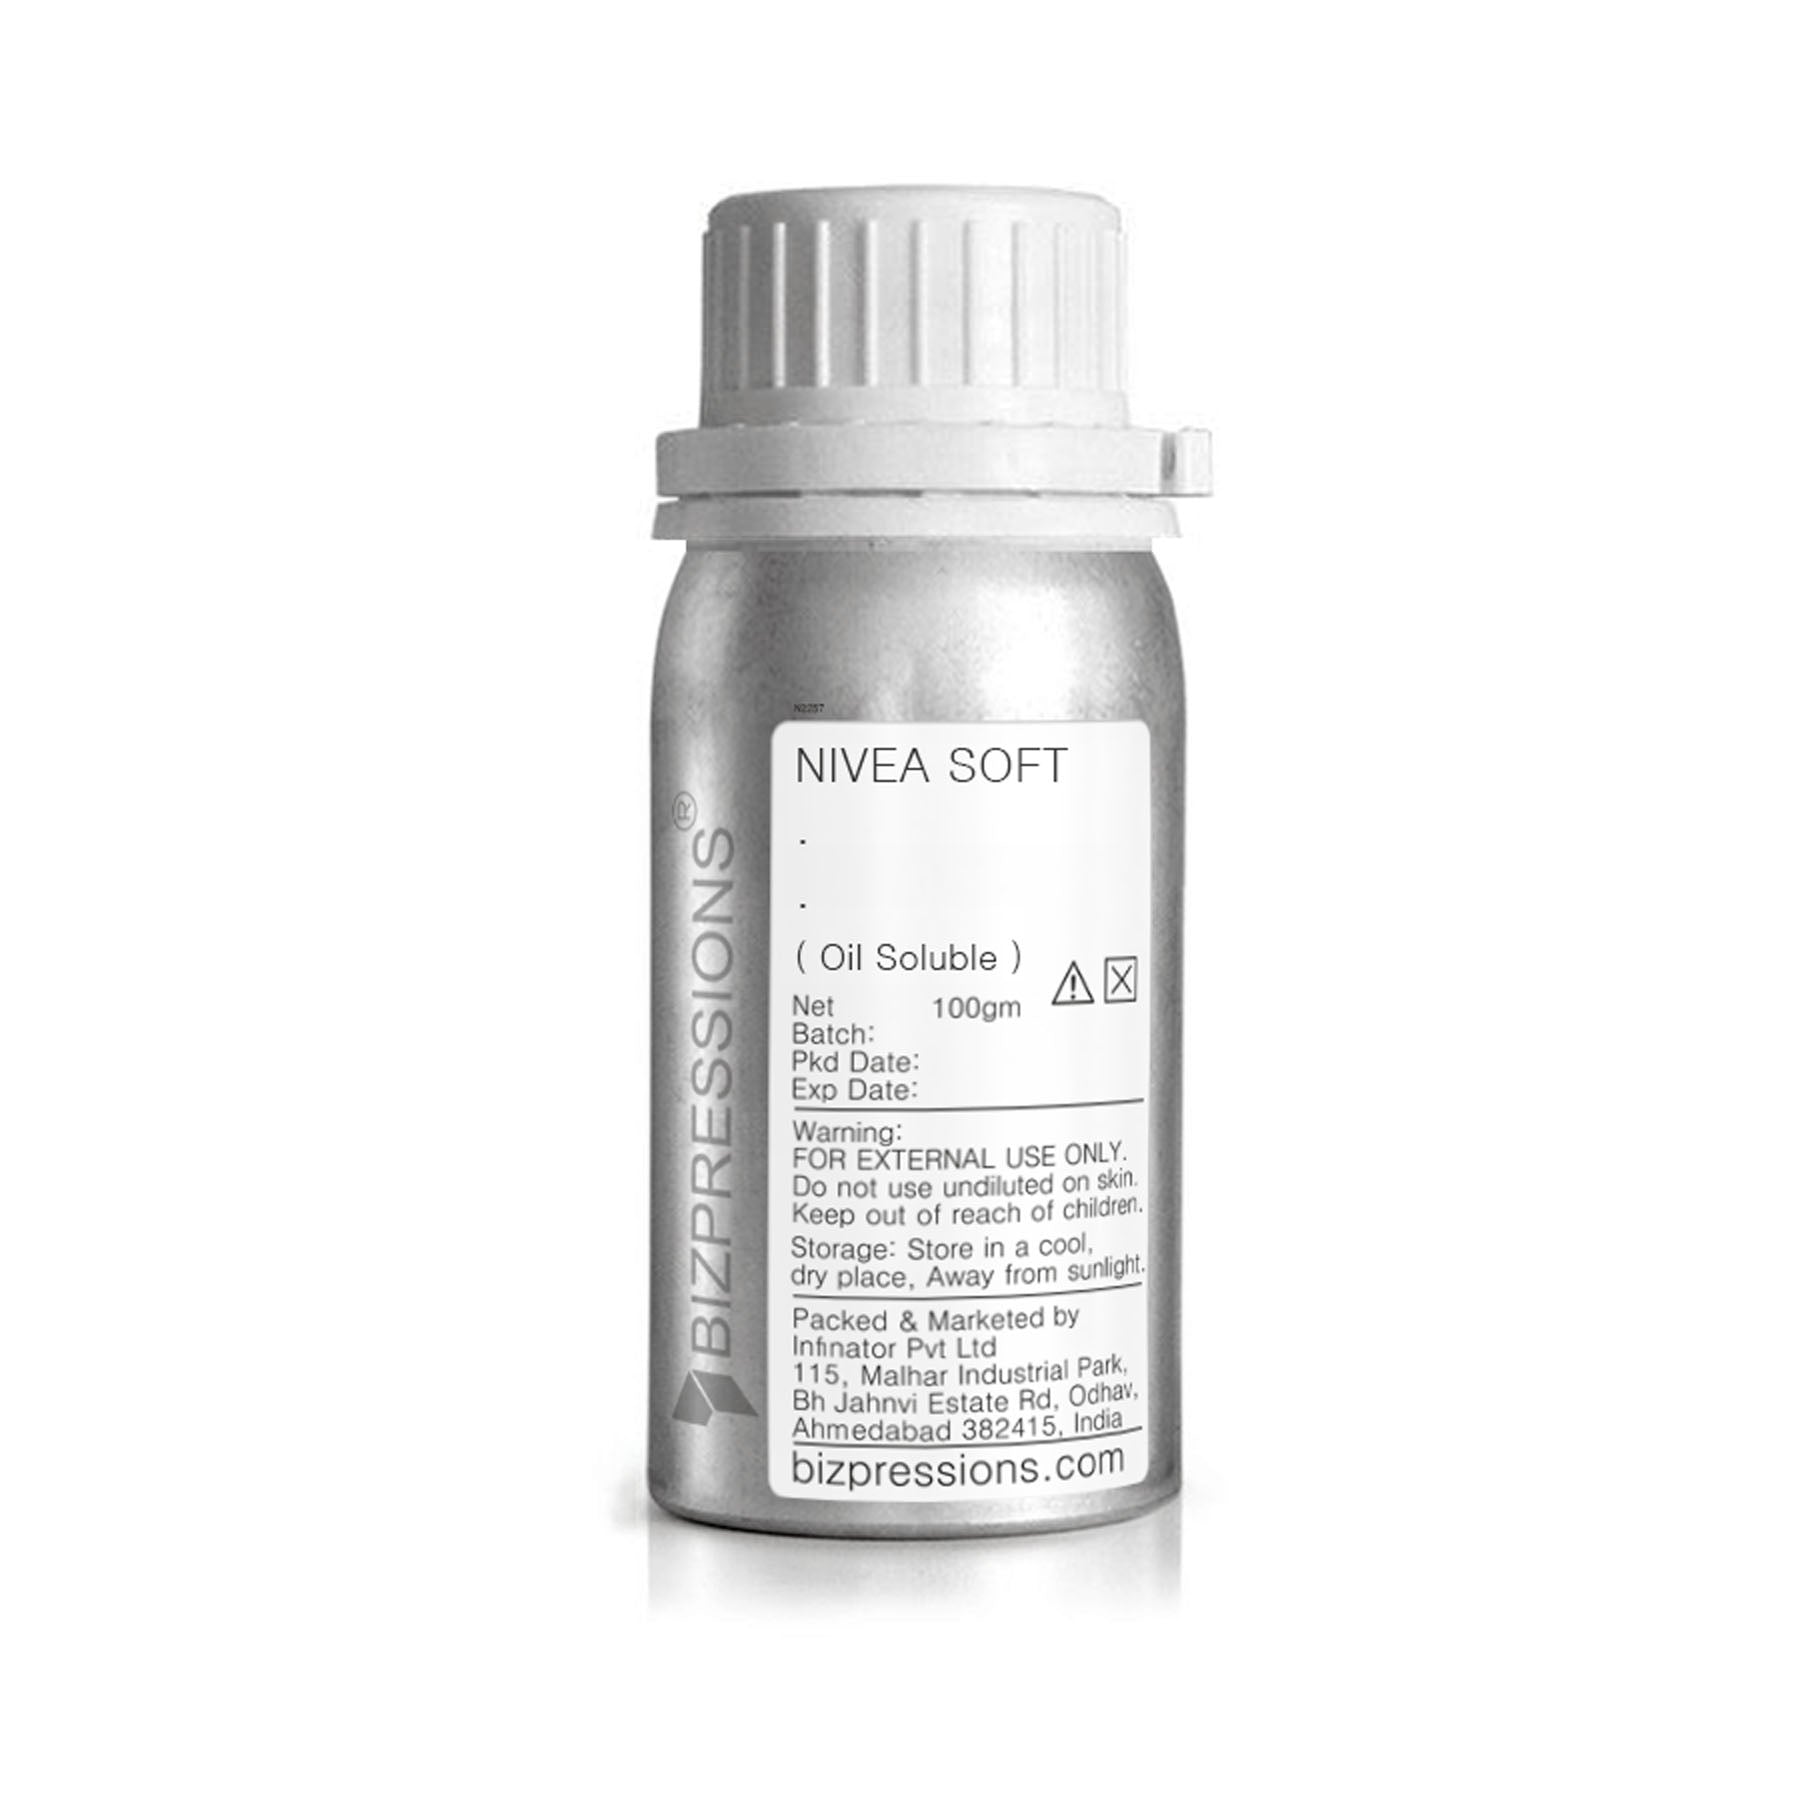 NIVEA SOFT - Fragrance ( Oil Soluble ) - 100 gm